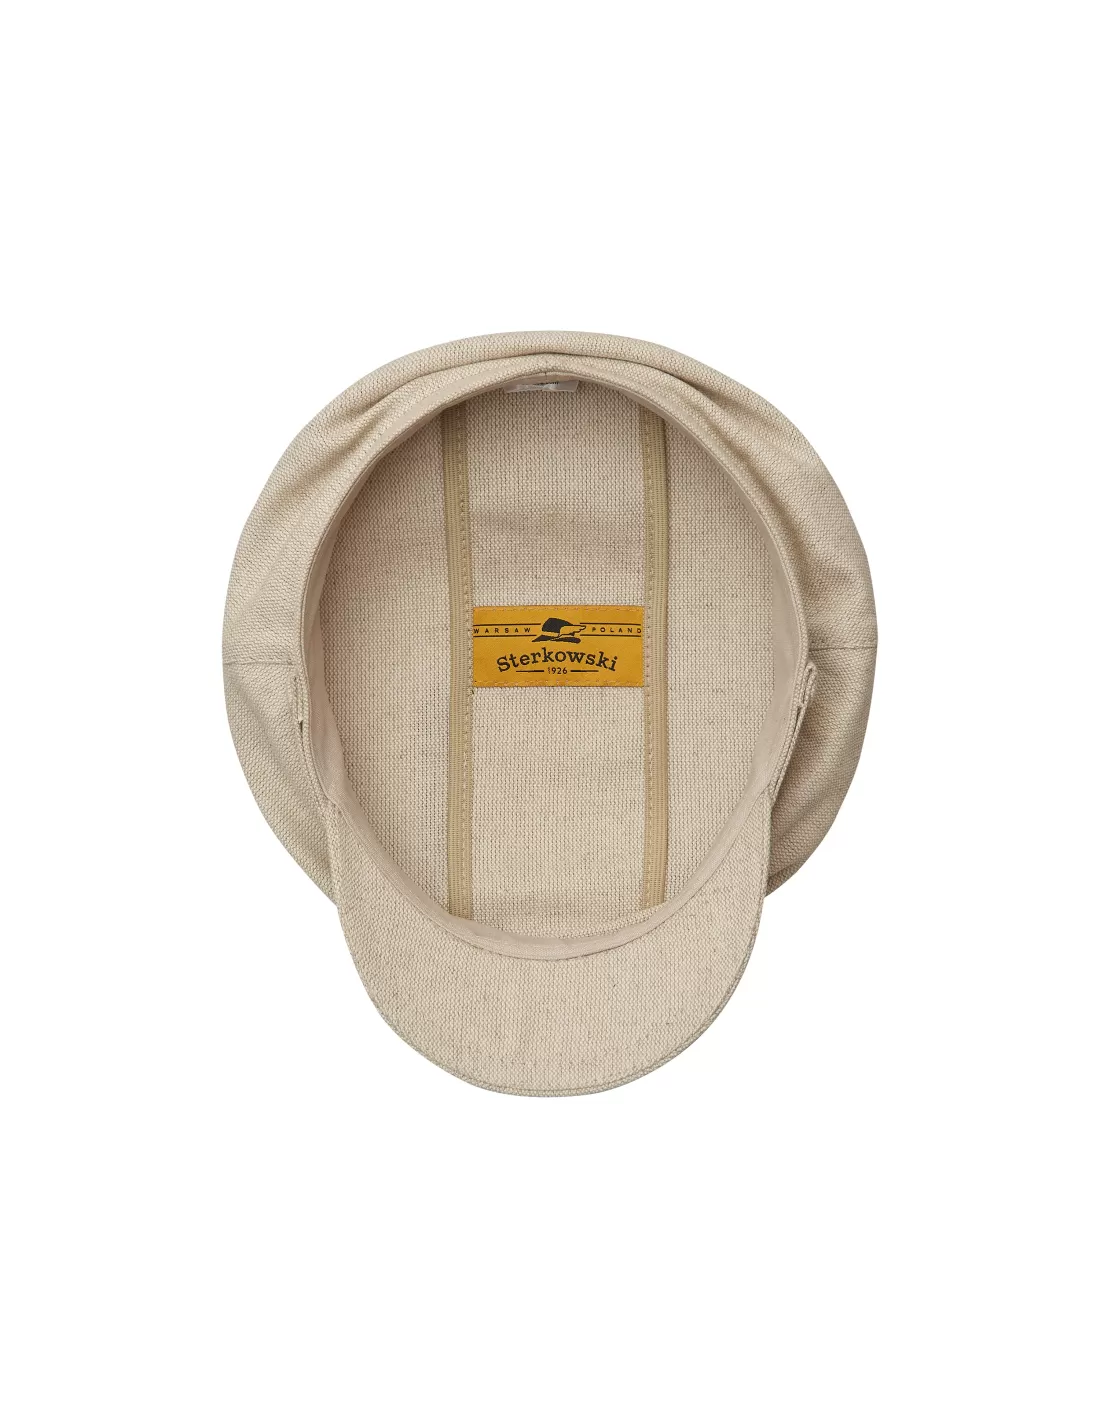 Maciejowka Model 6 Liverpool cap made of 100% linen. John Lennon